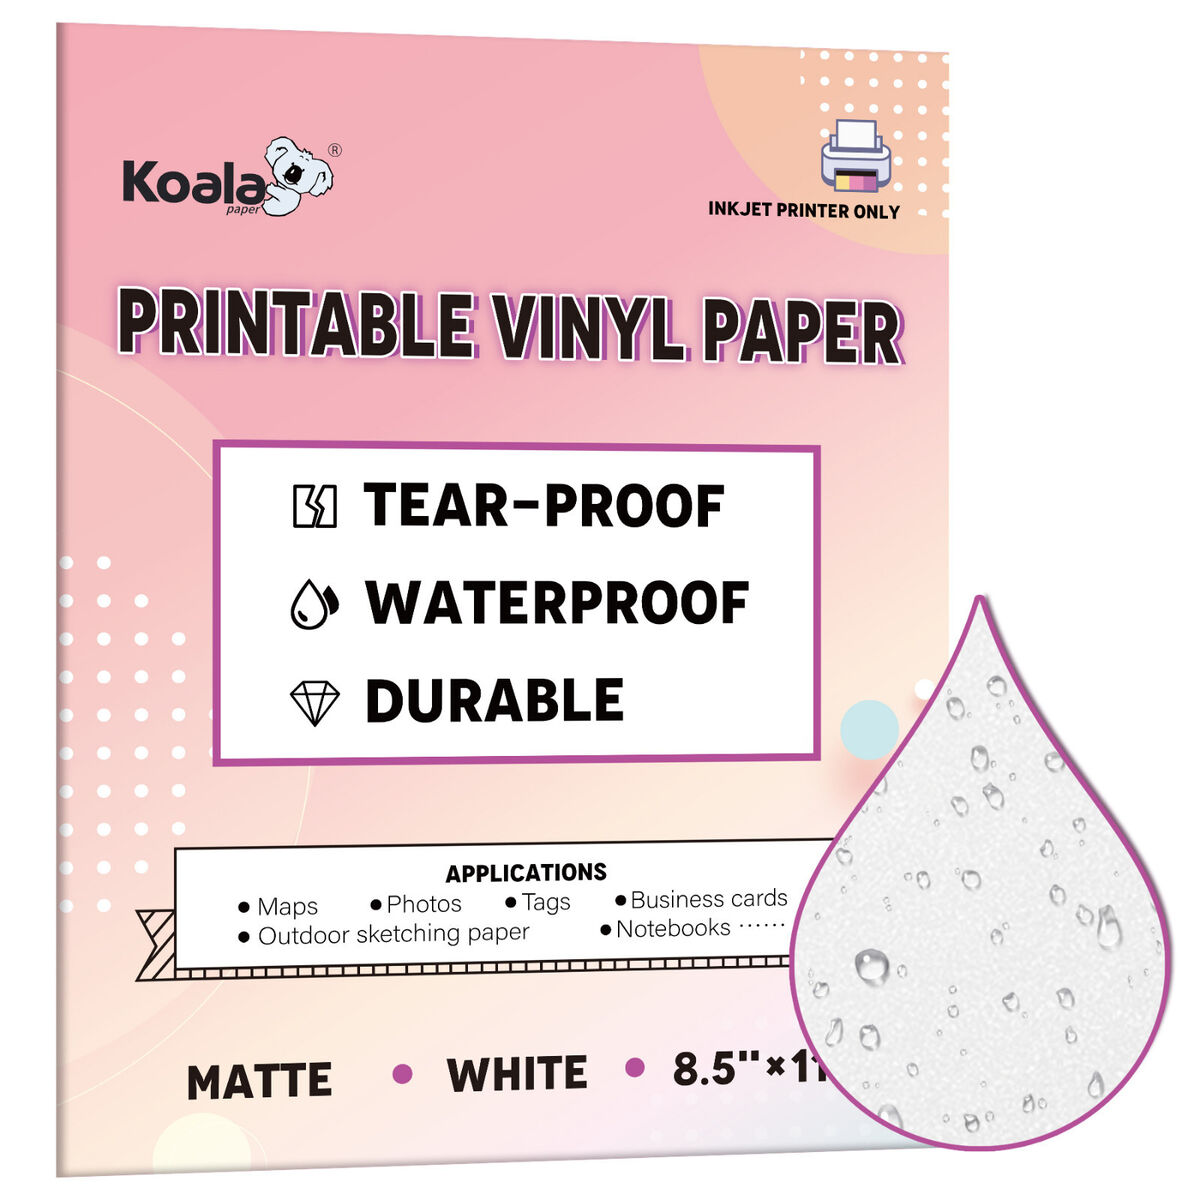 Koala Printable Waterproof Paper for Inkjet Printer, 8.5x11 in 30 Sheets Matte White Vinyl Printer Paper, Synthetic Paper Non-Tearable, Durable, Quick